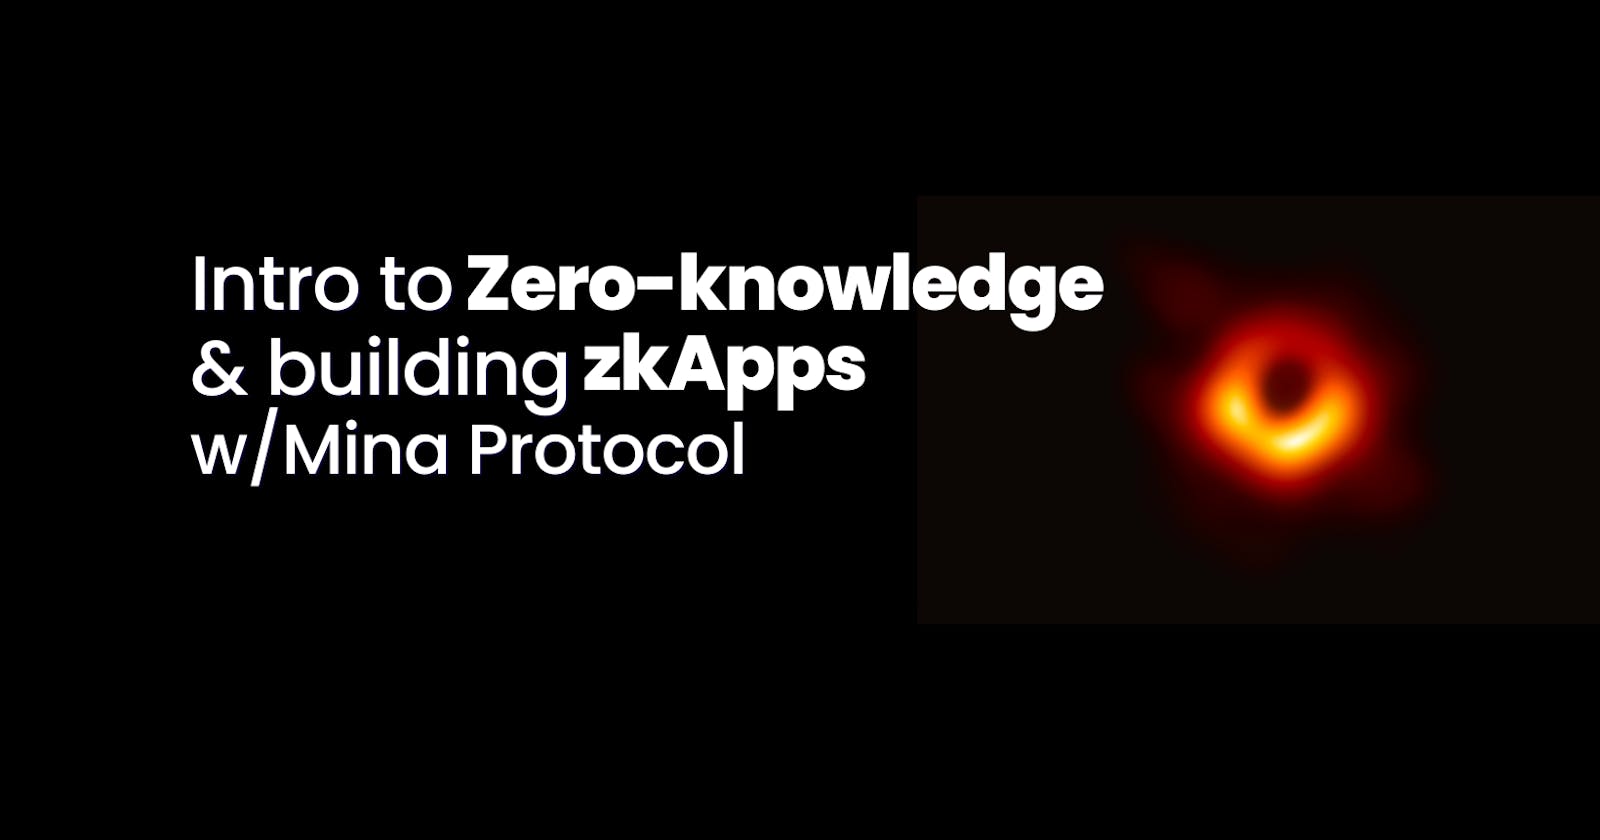 Intro to Zero-knowledge & Building zkApps w/Mina Protocol